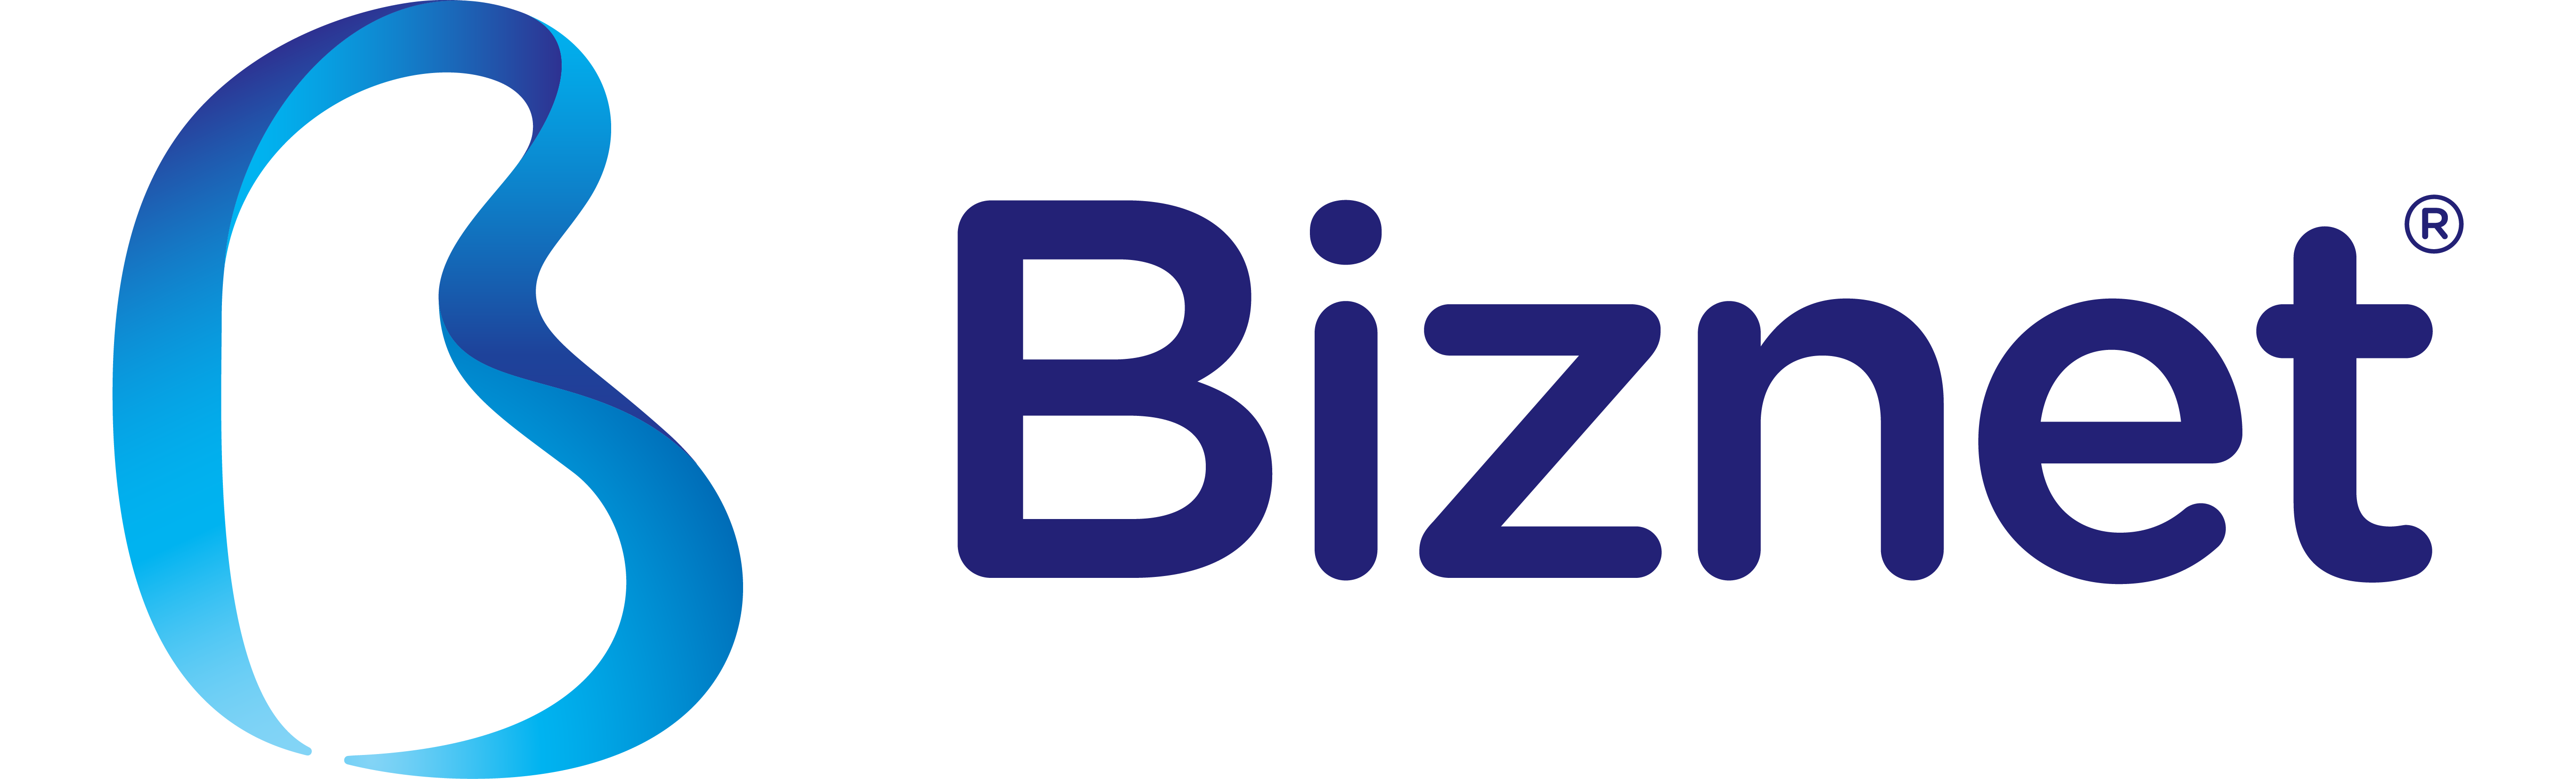 biznet_logo-ok-1576839916.png